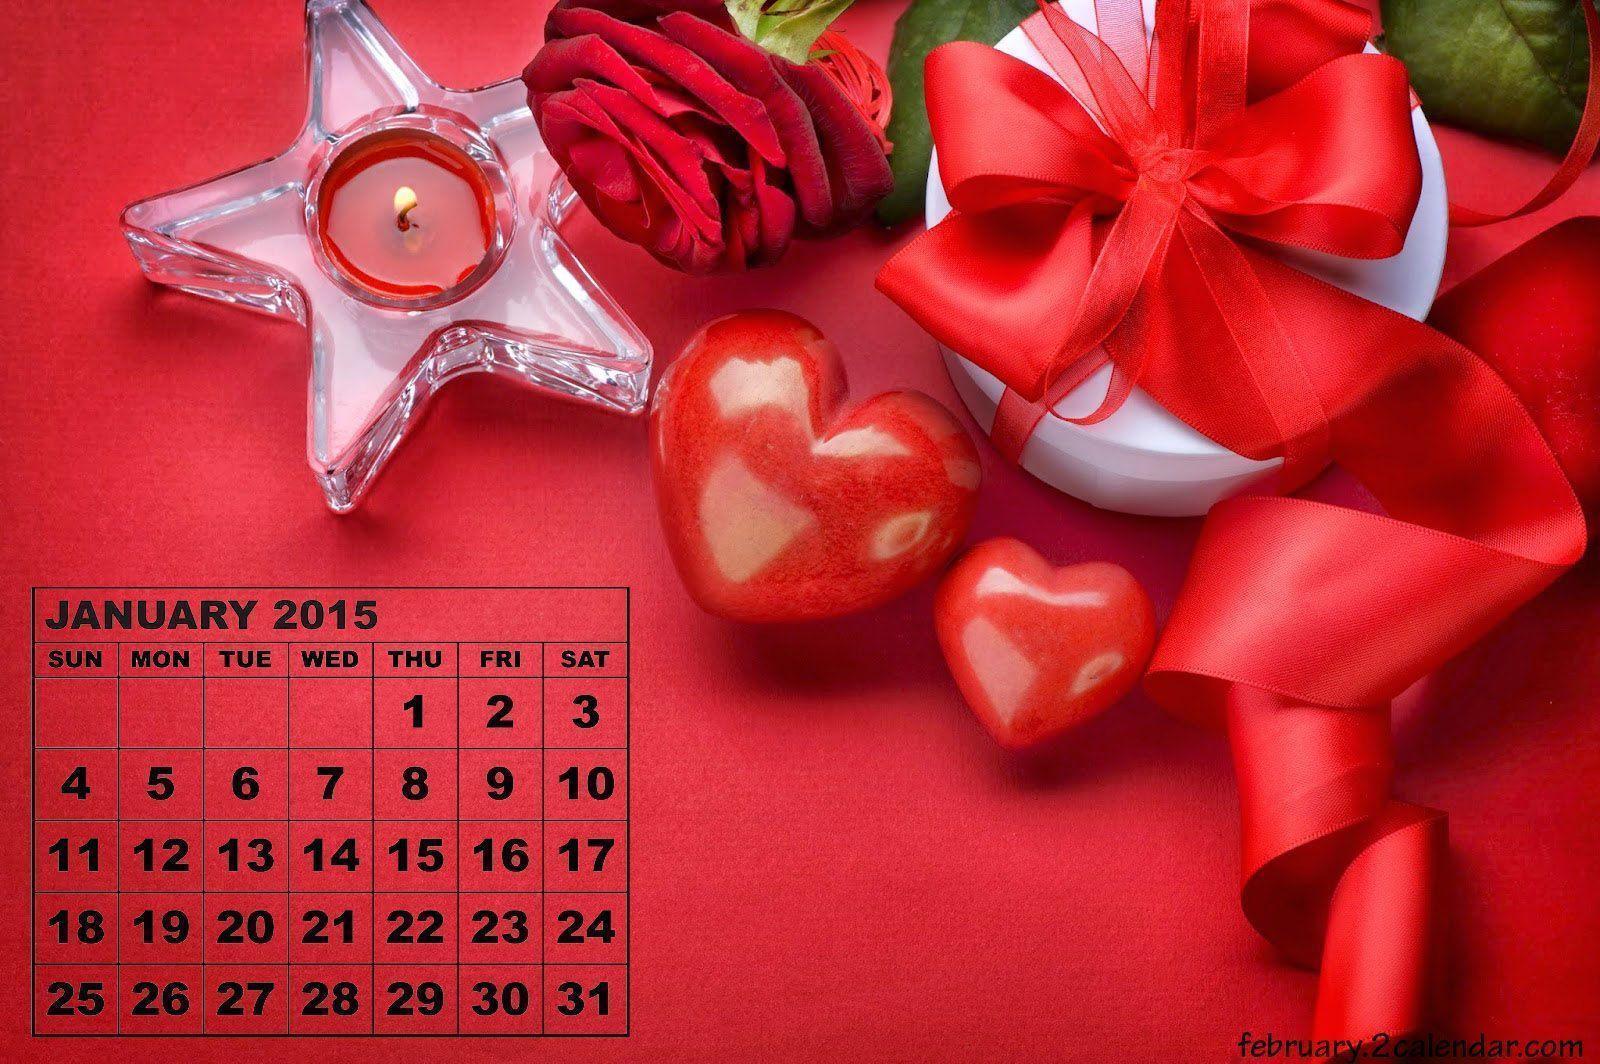 February 2015 Calendar Wallpaper, image, picture, photo